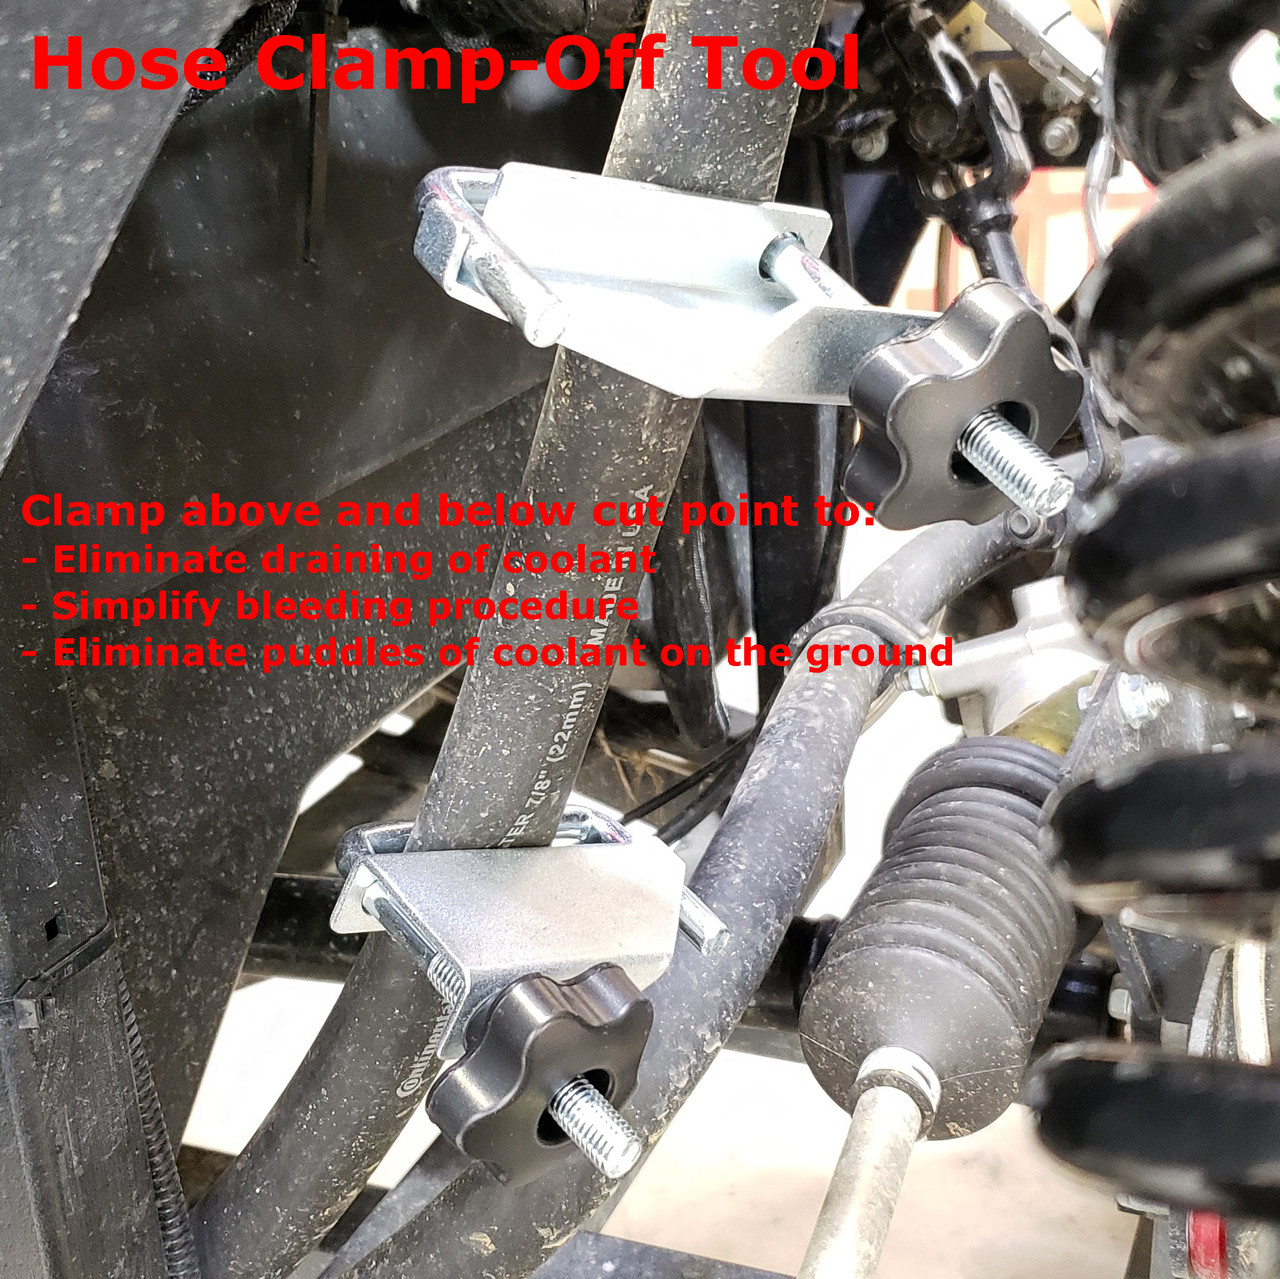 Hose Clamp Off Tools - Eliminate coolant leaks